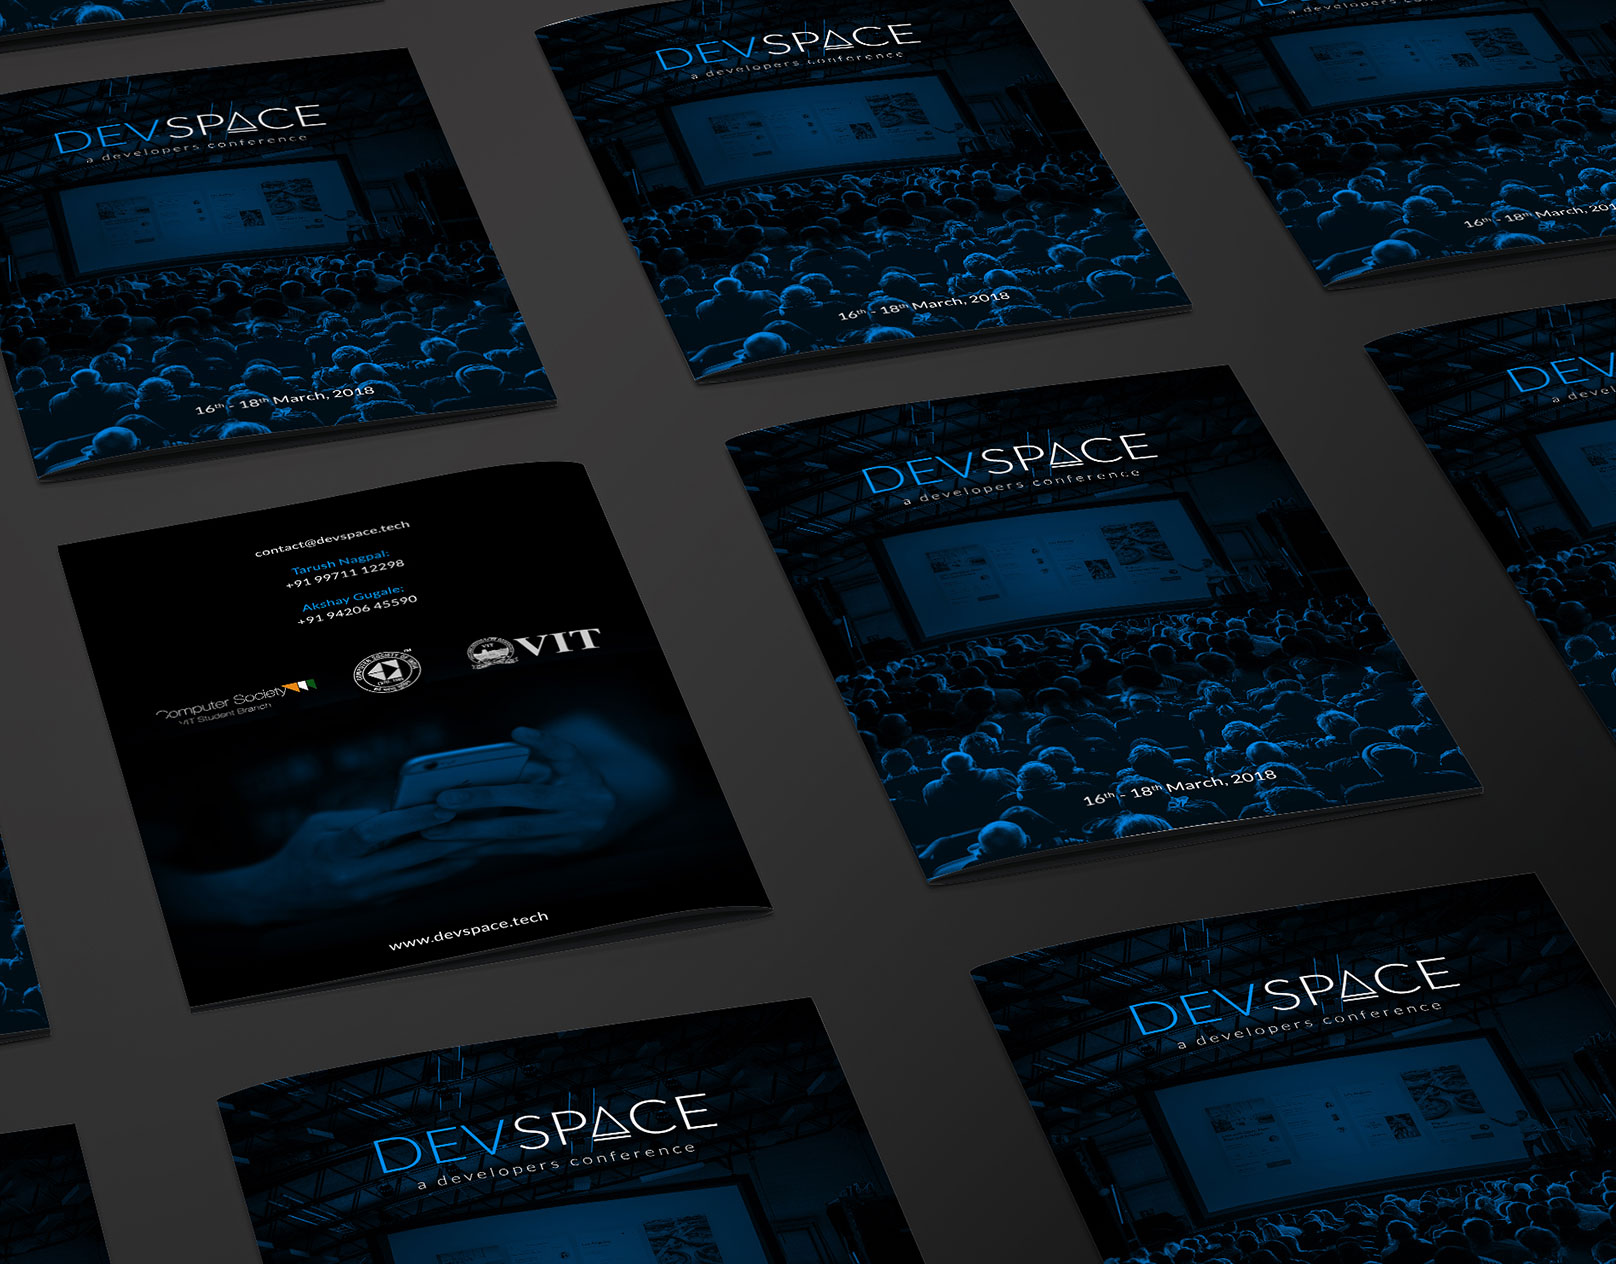 Devspace Brochure 2018